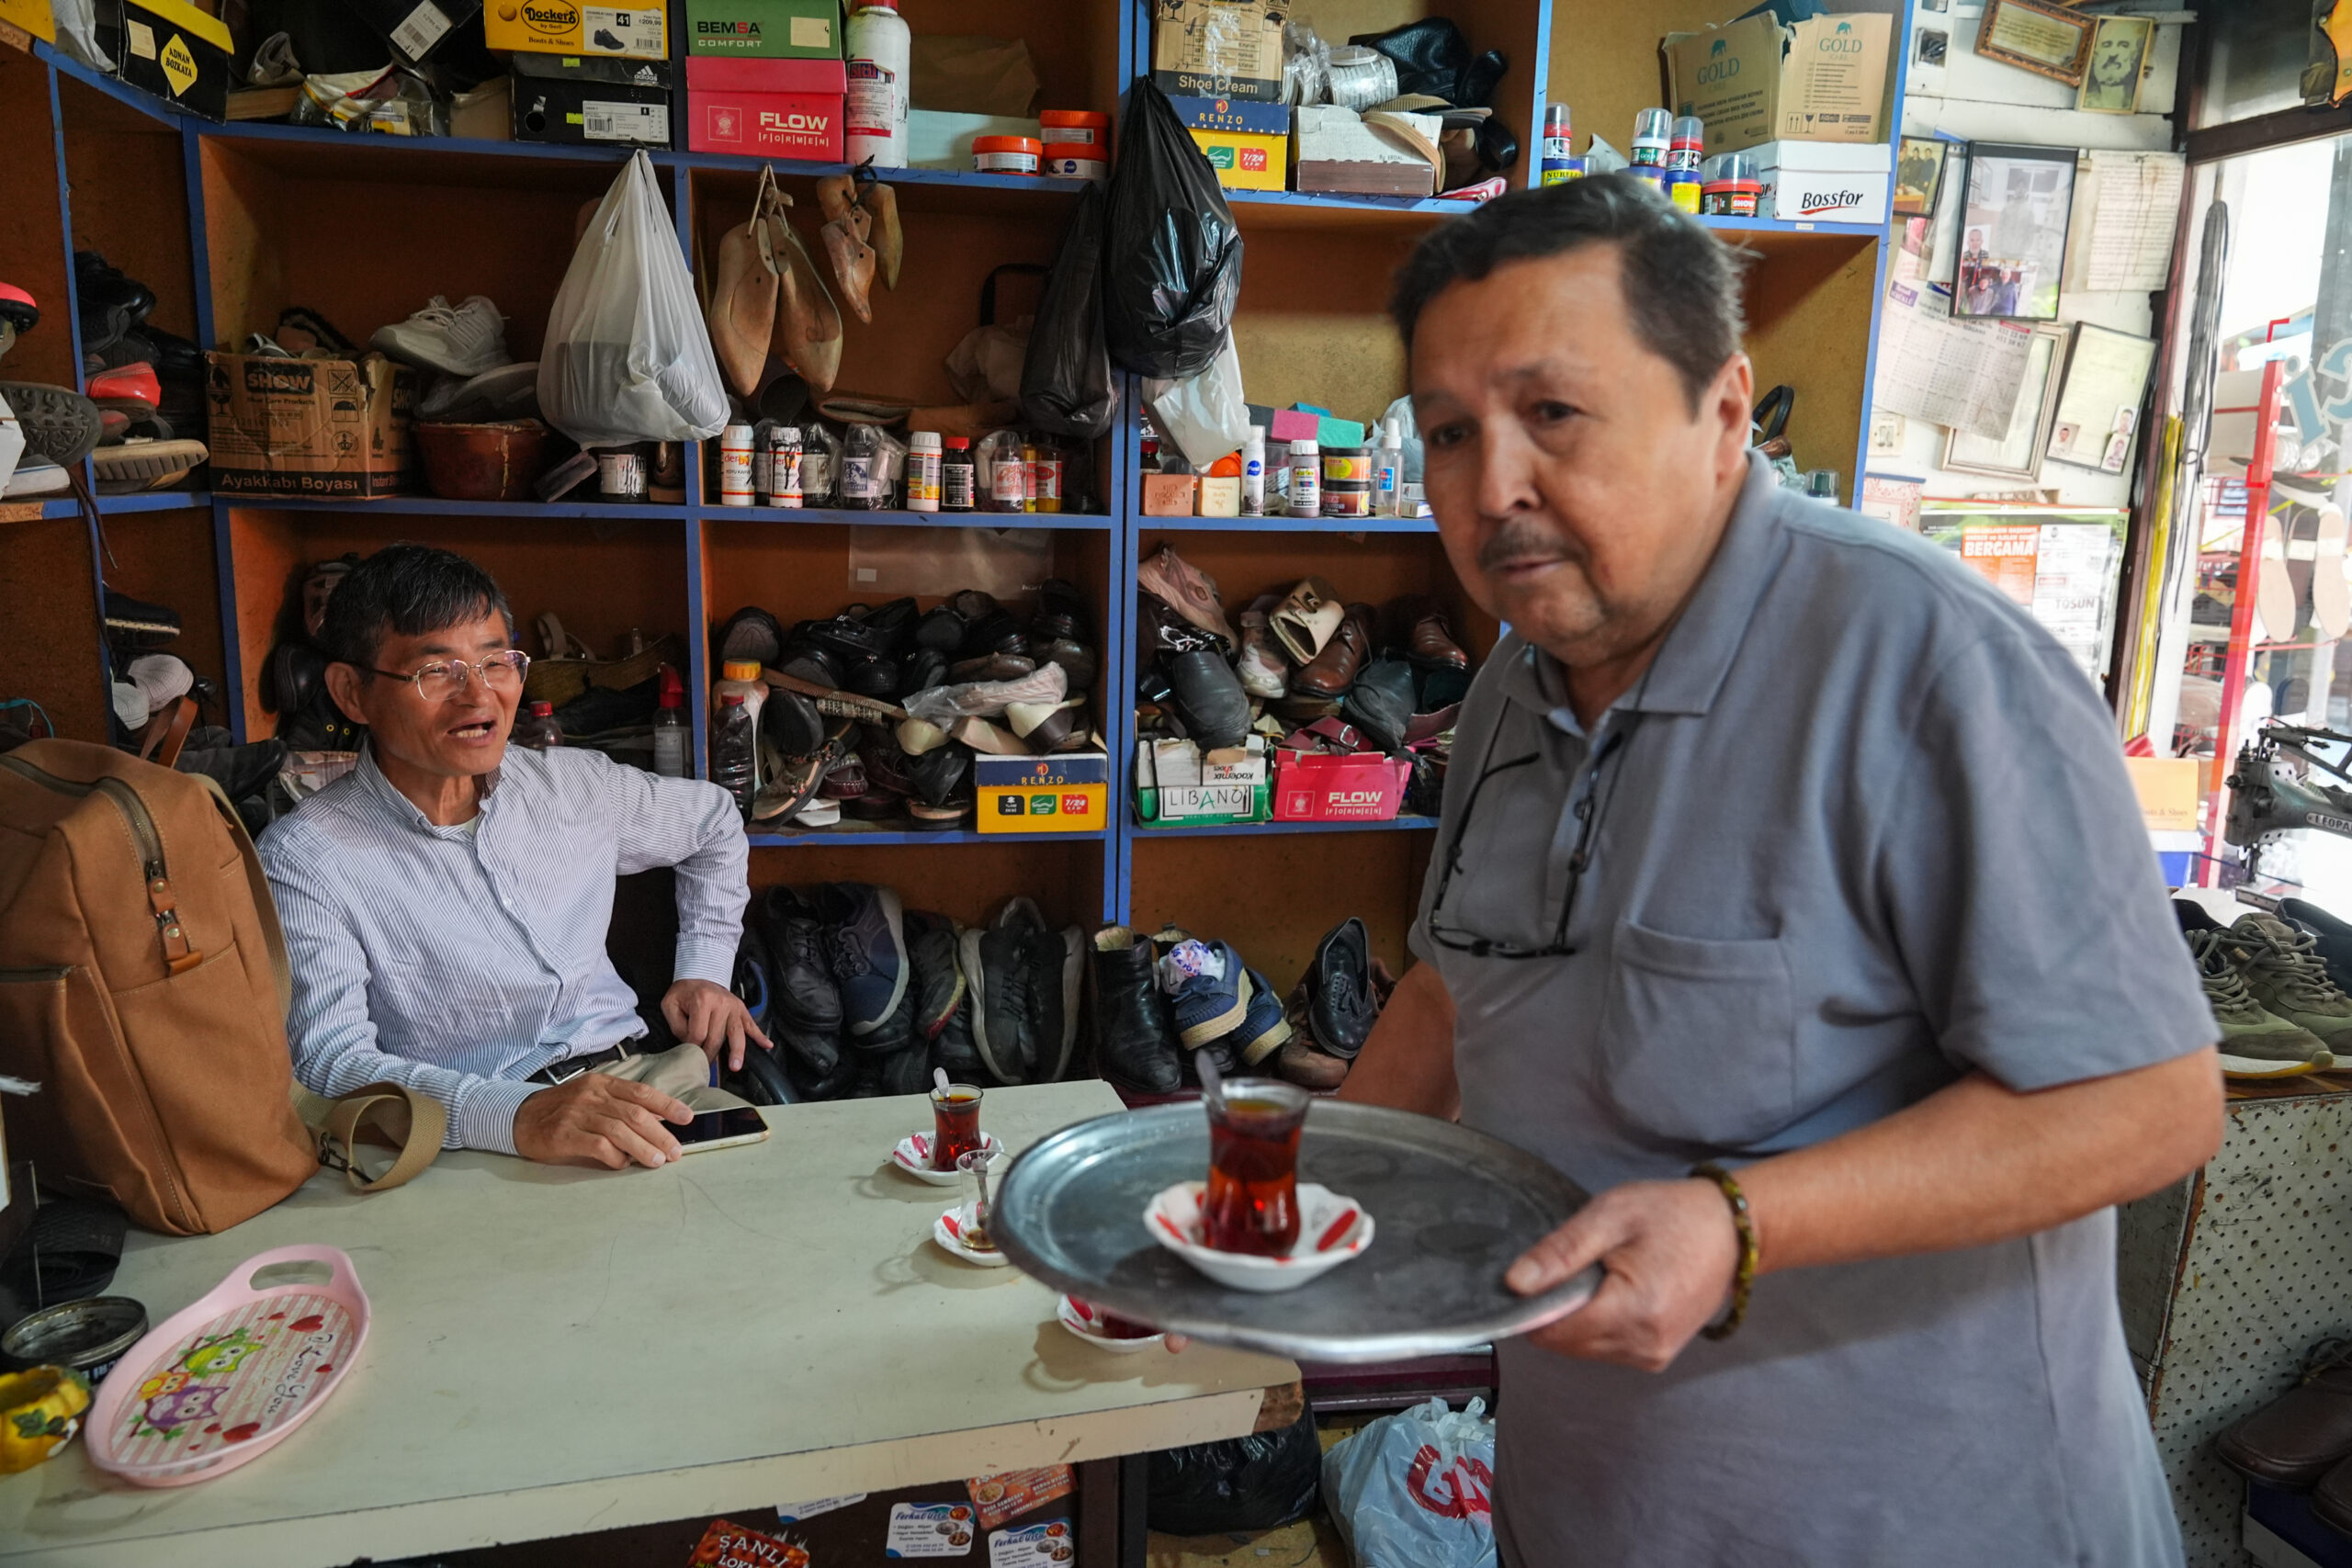 Turkish tea and friendship transform Japanese man's life